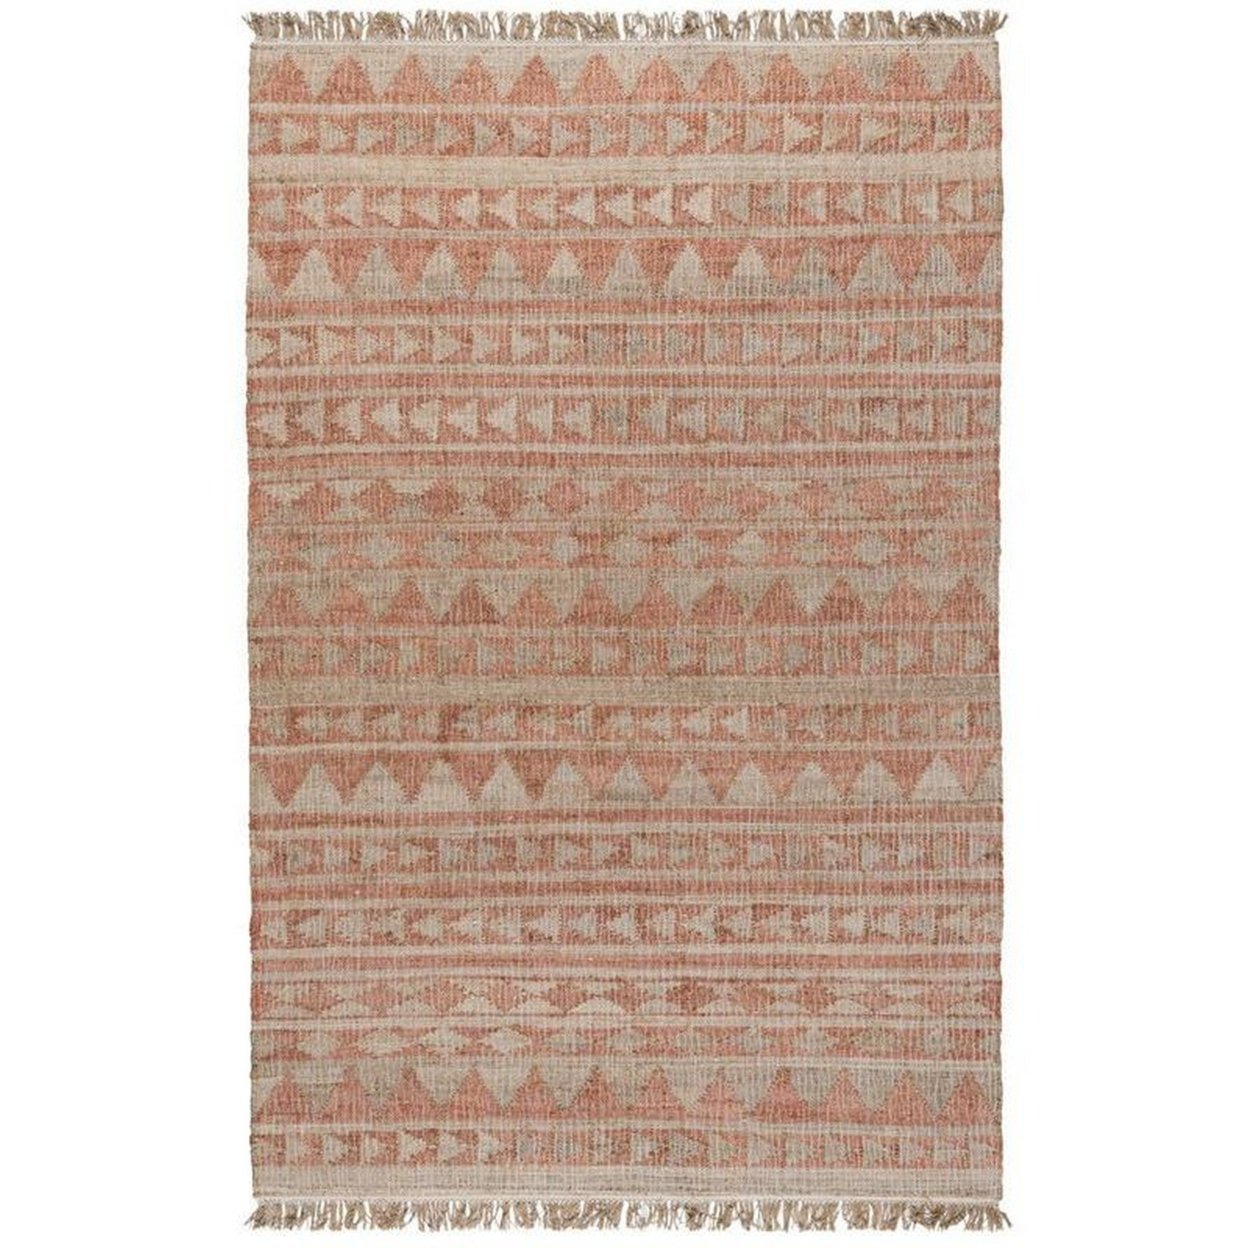 Moly 10 X 8 Tassel Area Rug, Tribal Triangle Pattern, Orange Handwoven Jute- Saltoro Sherpi